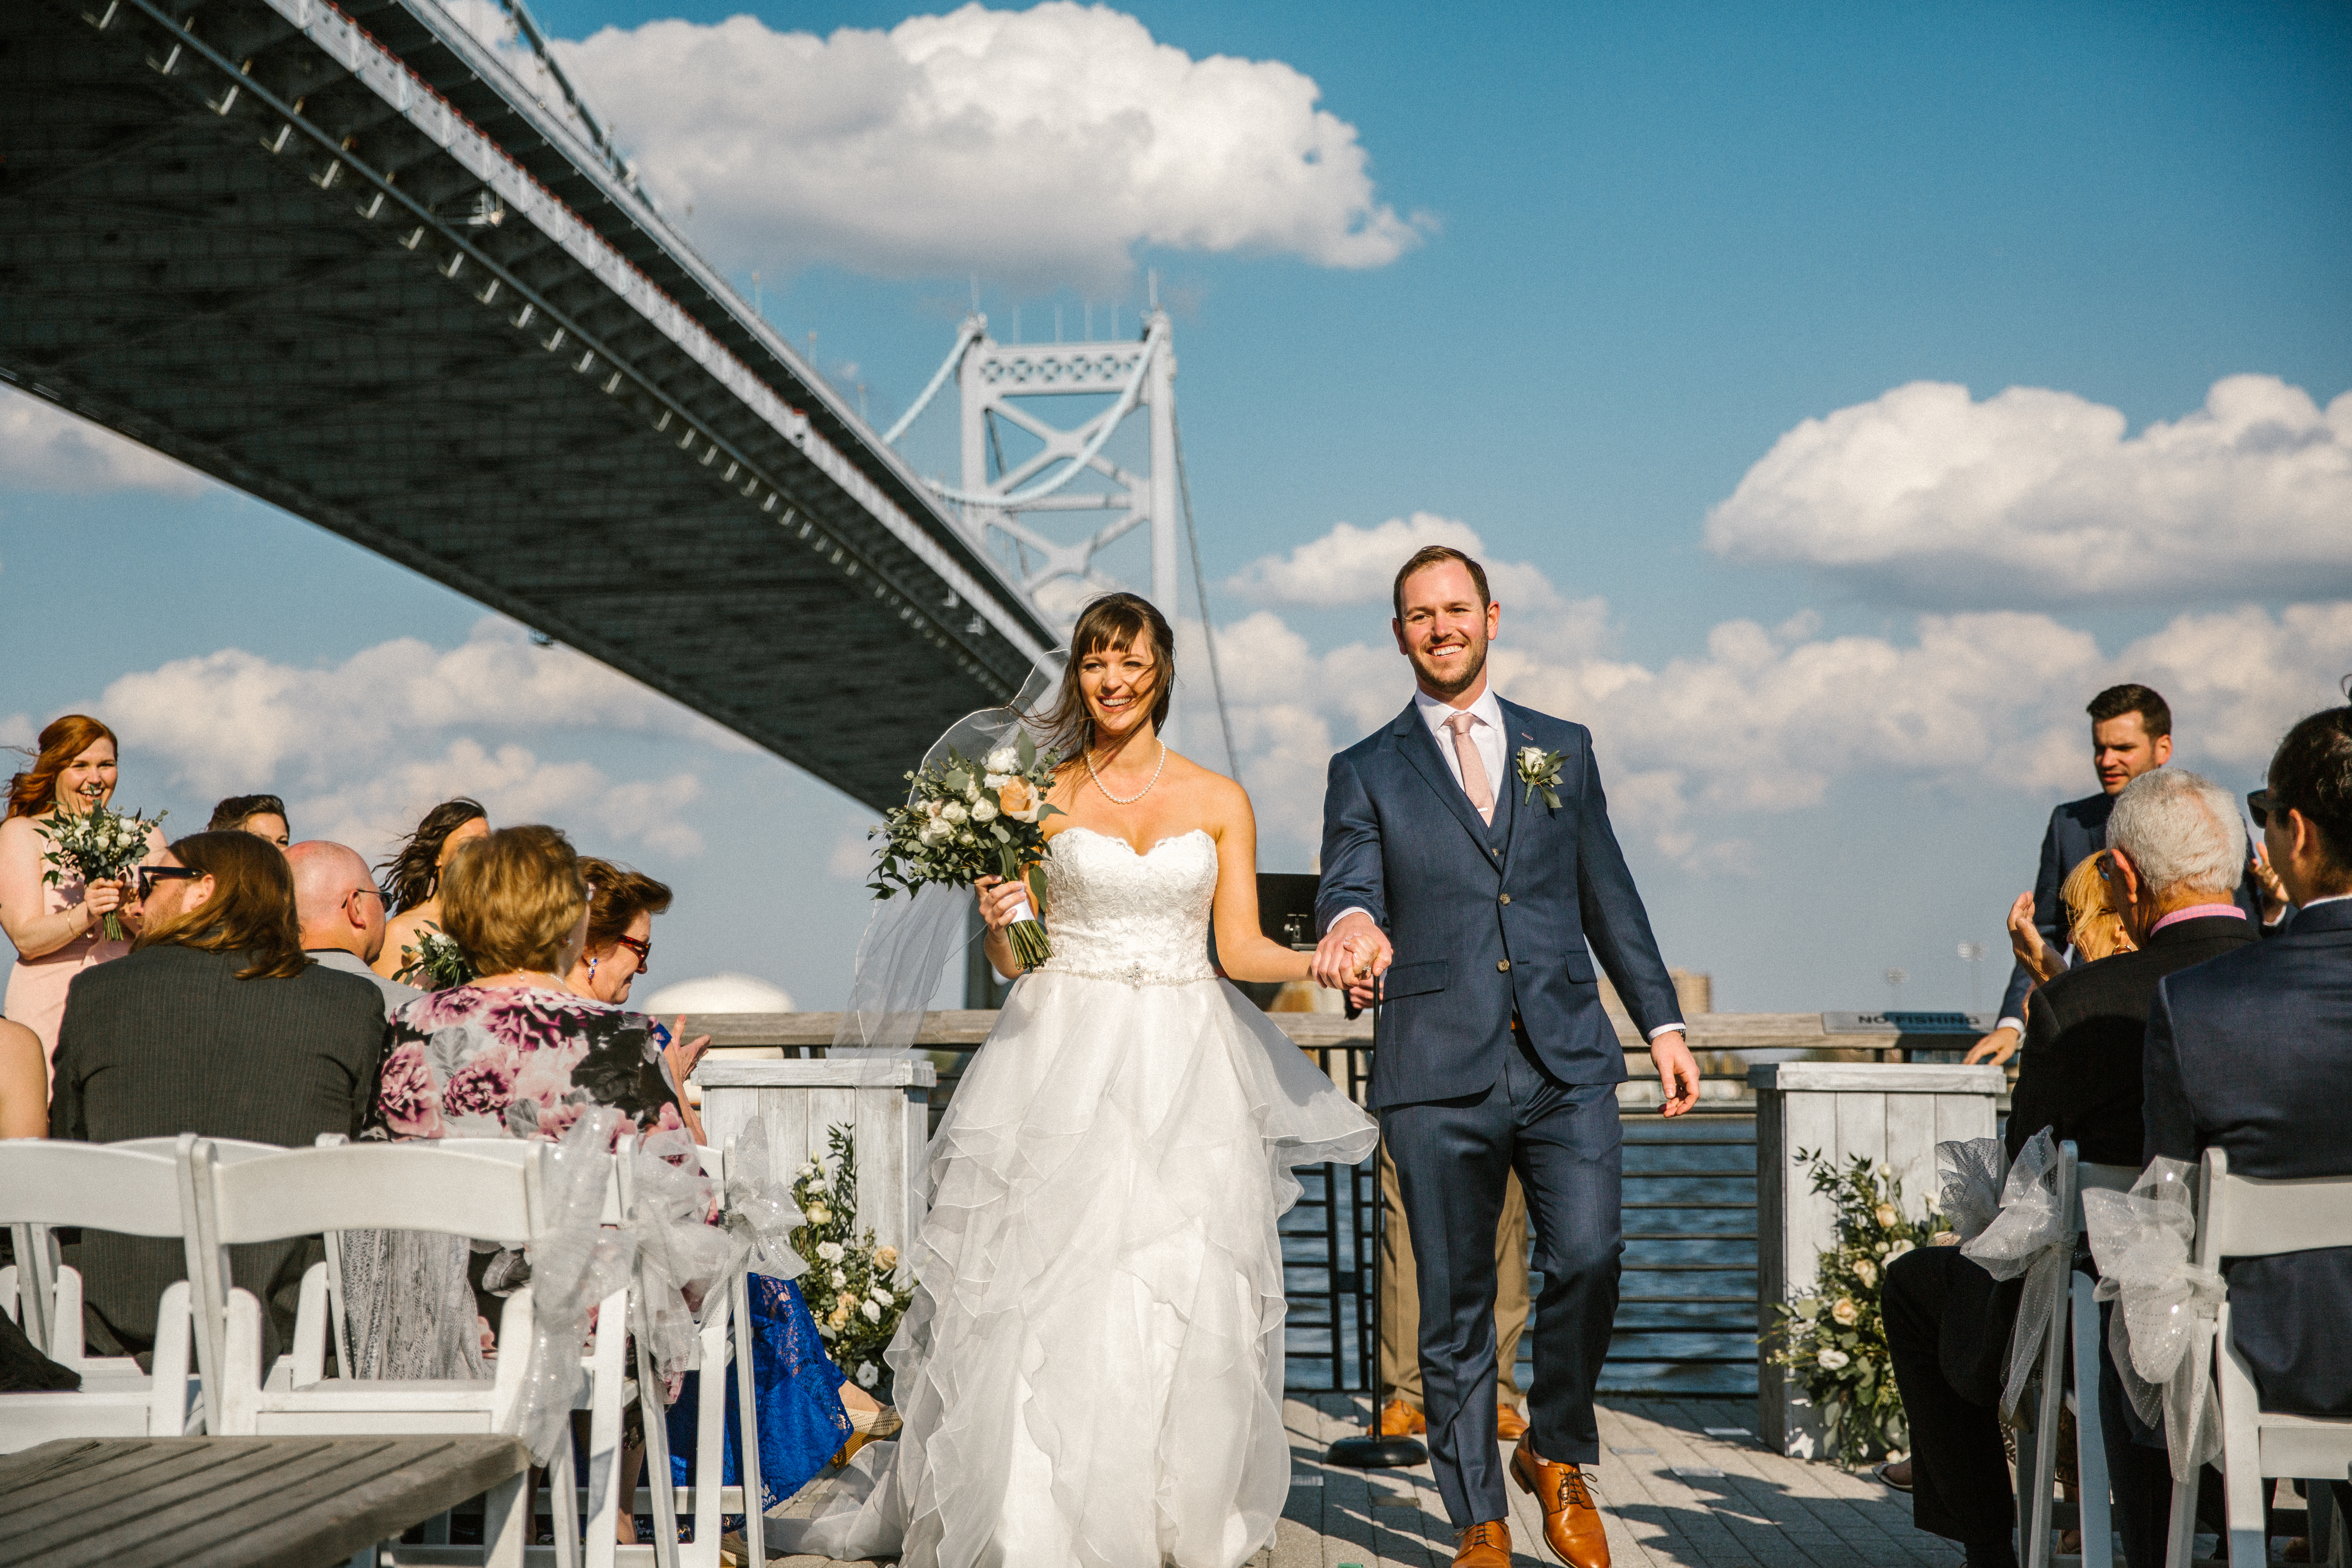 Philadelphia Wedding Photographer | Race St. Pier and The Olde Bar Wedding | Peter + Sandra